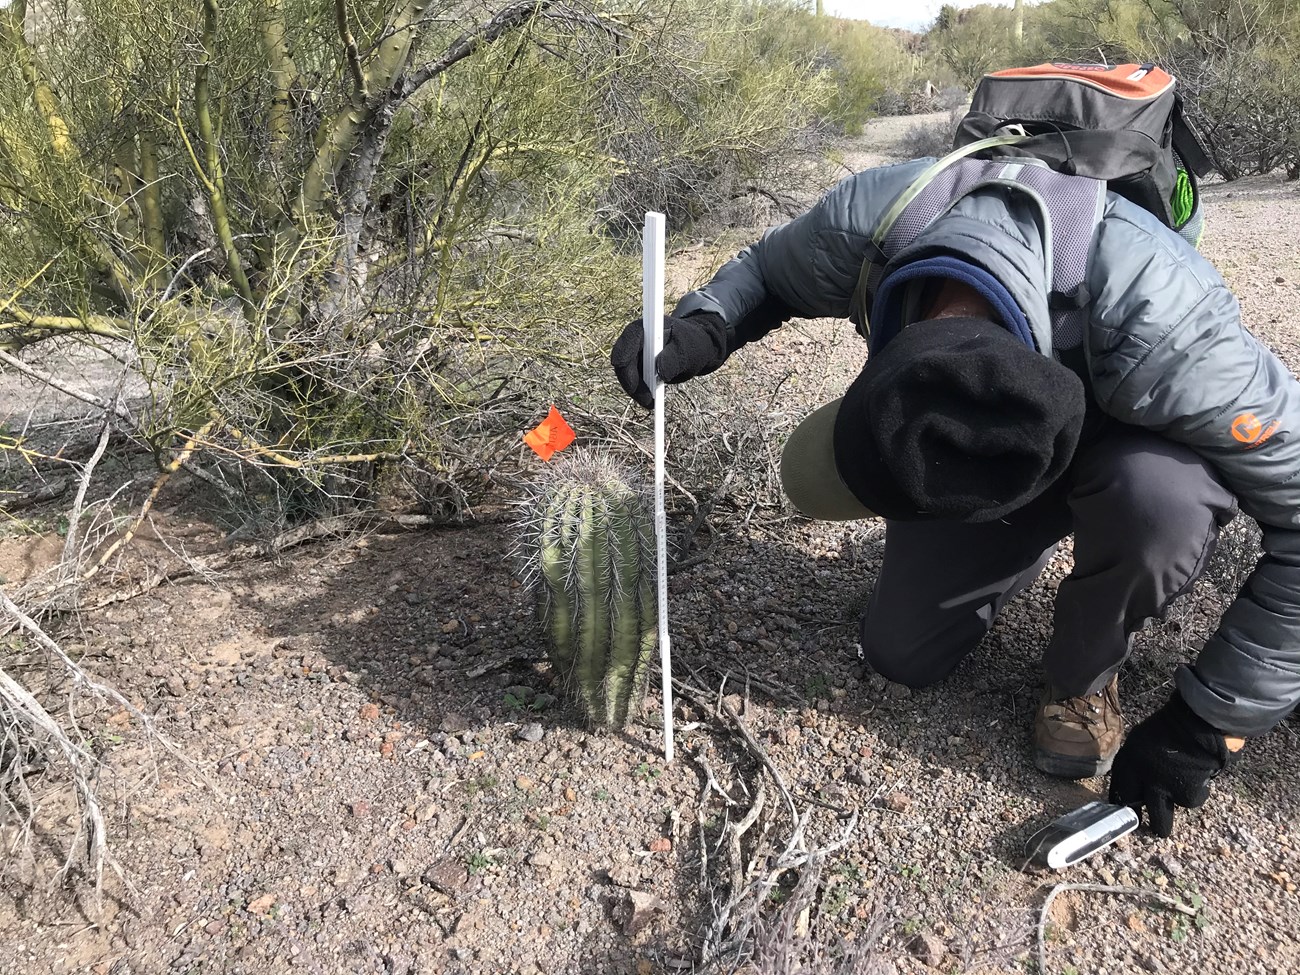 Volunteer measures small saguaro